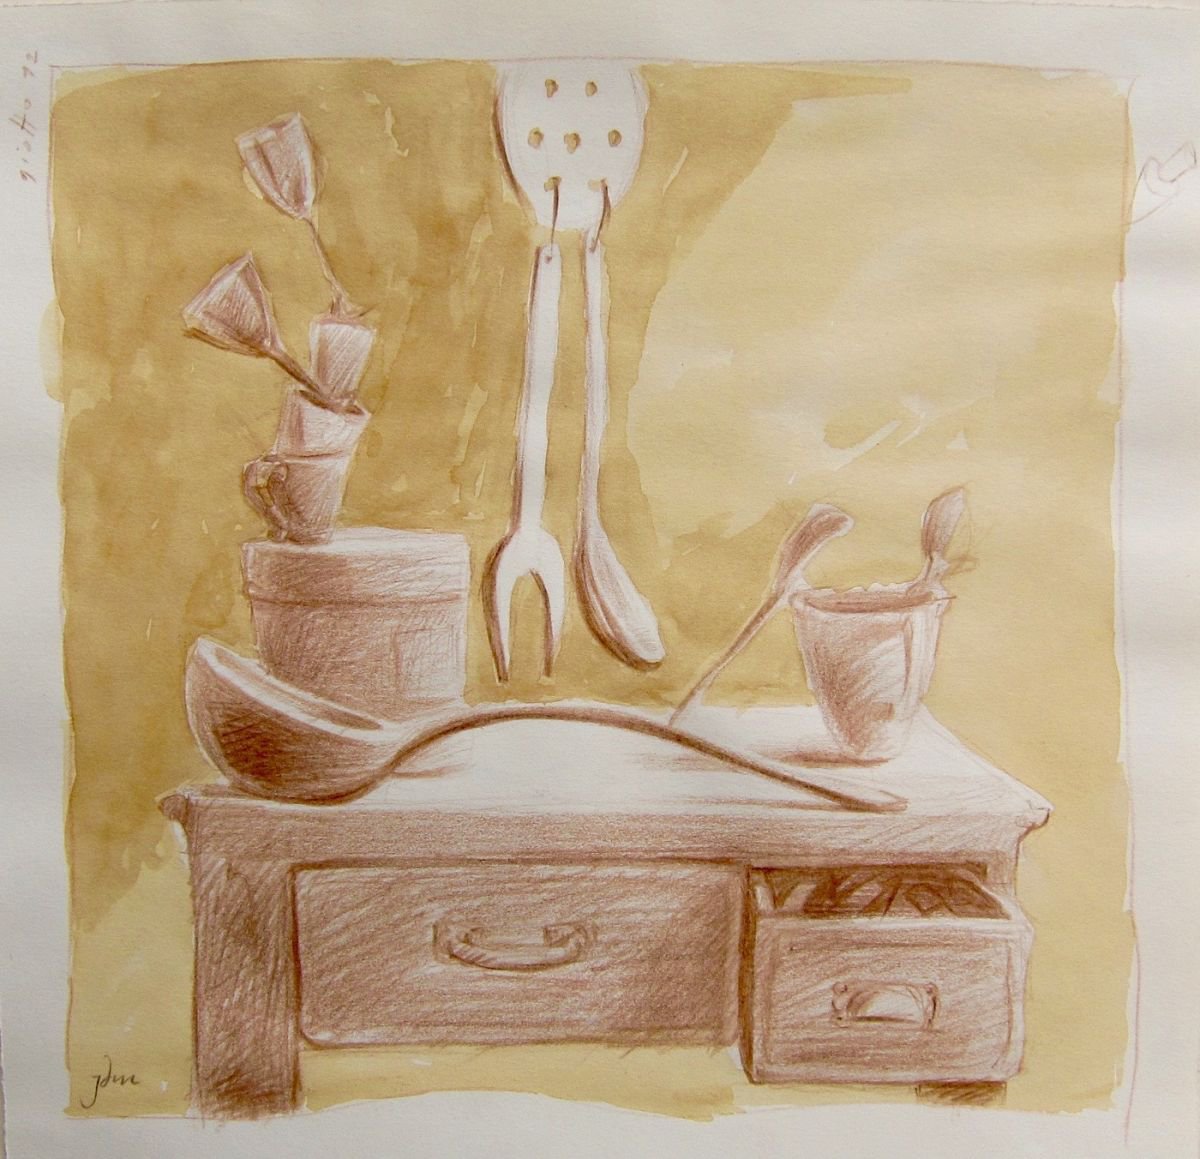 Cucina by Jacopo Dei Mori